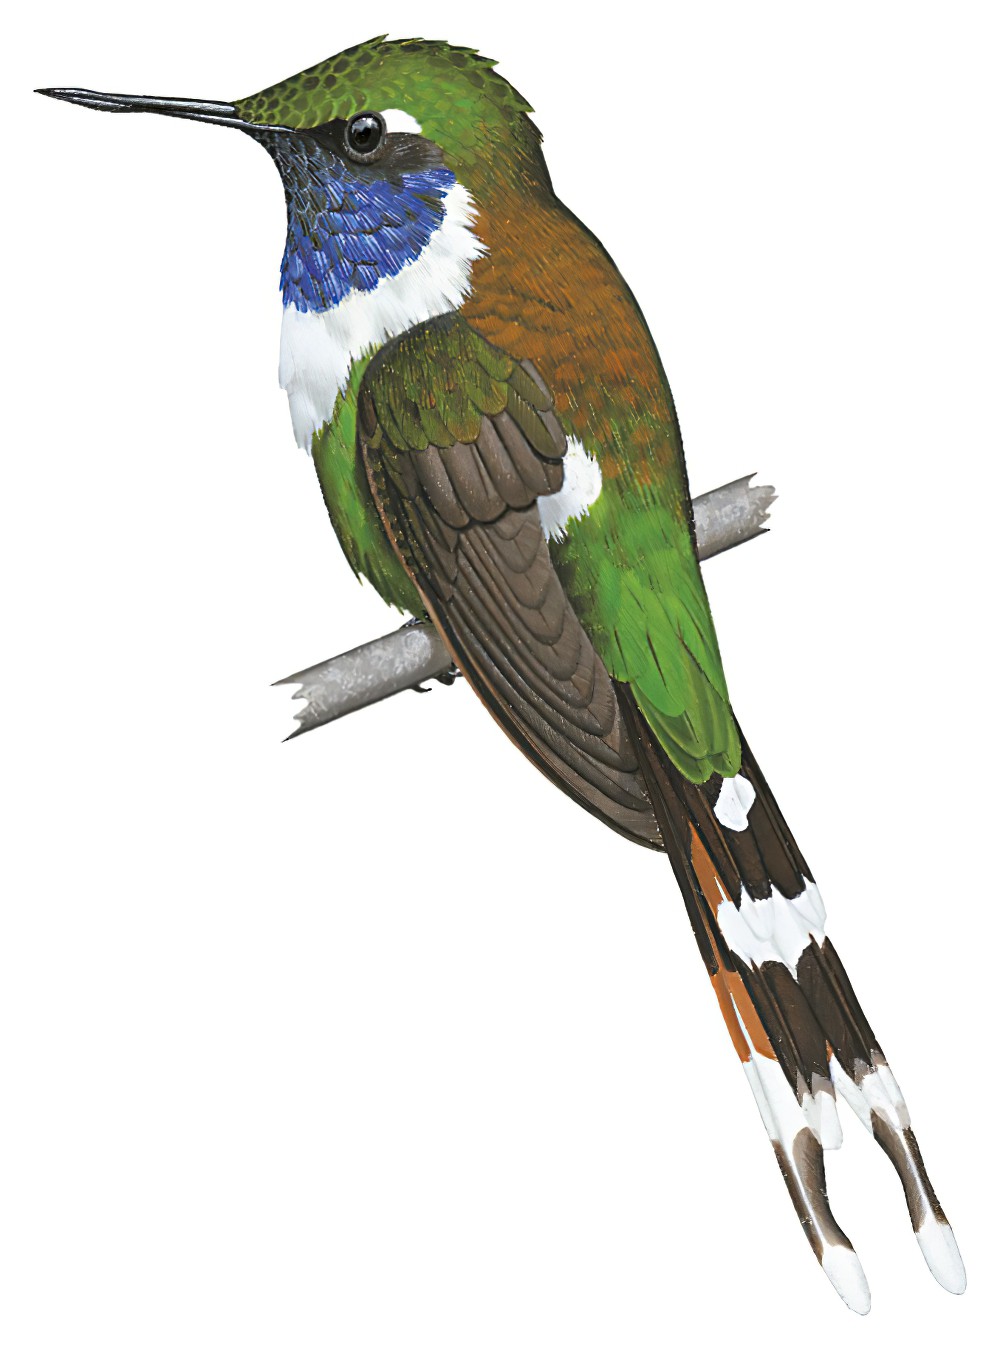 Sparkling-tailed Hummingbird / Tilmatura dupontii